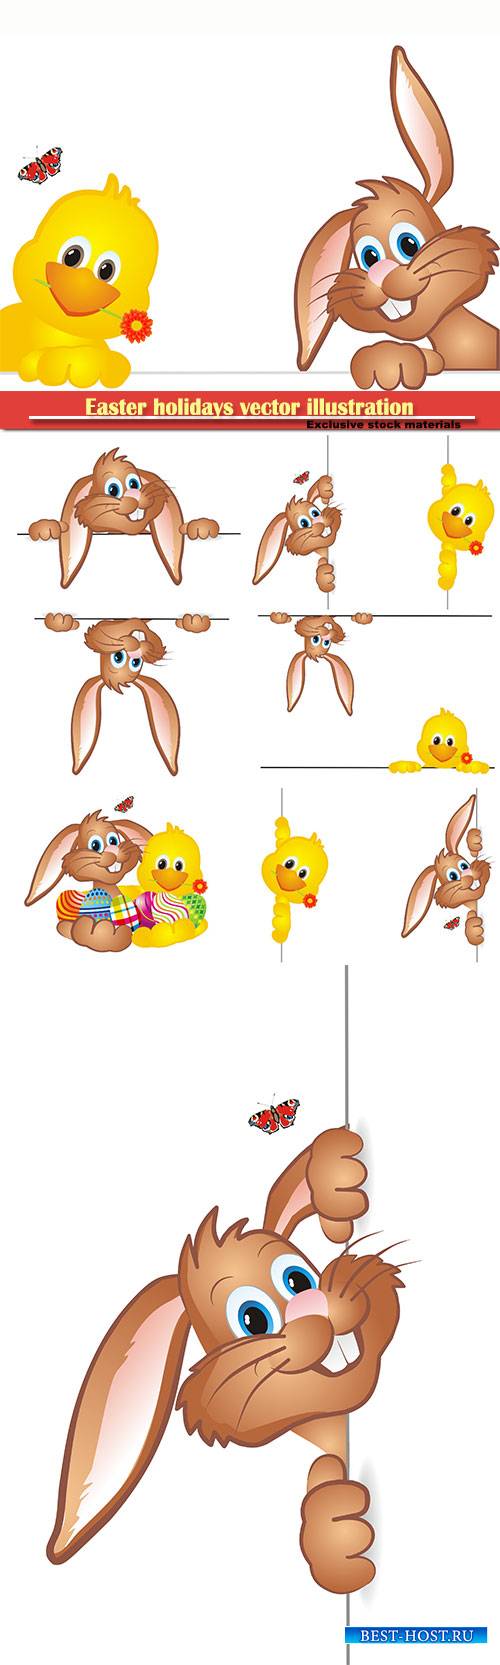 Easter holidays vector illustration # 4